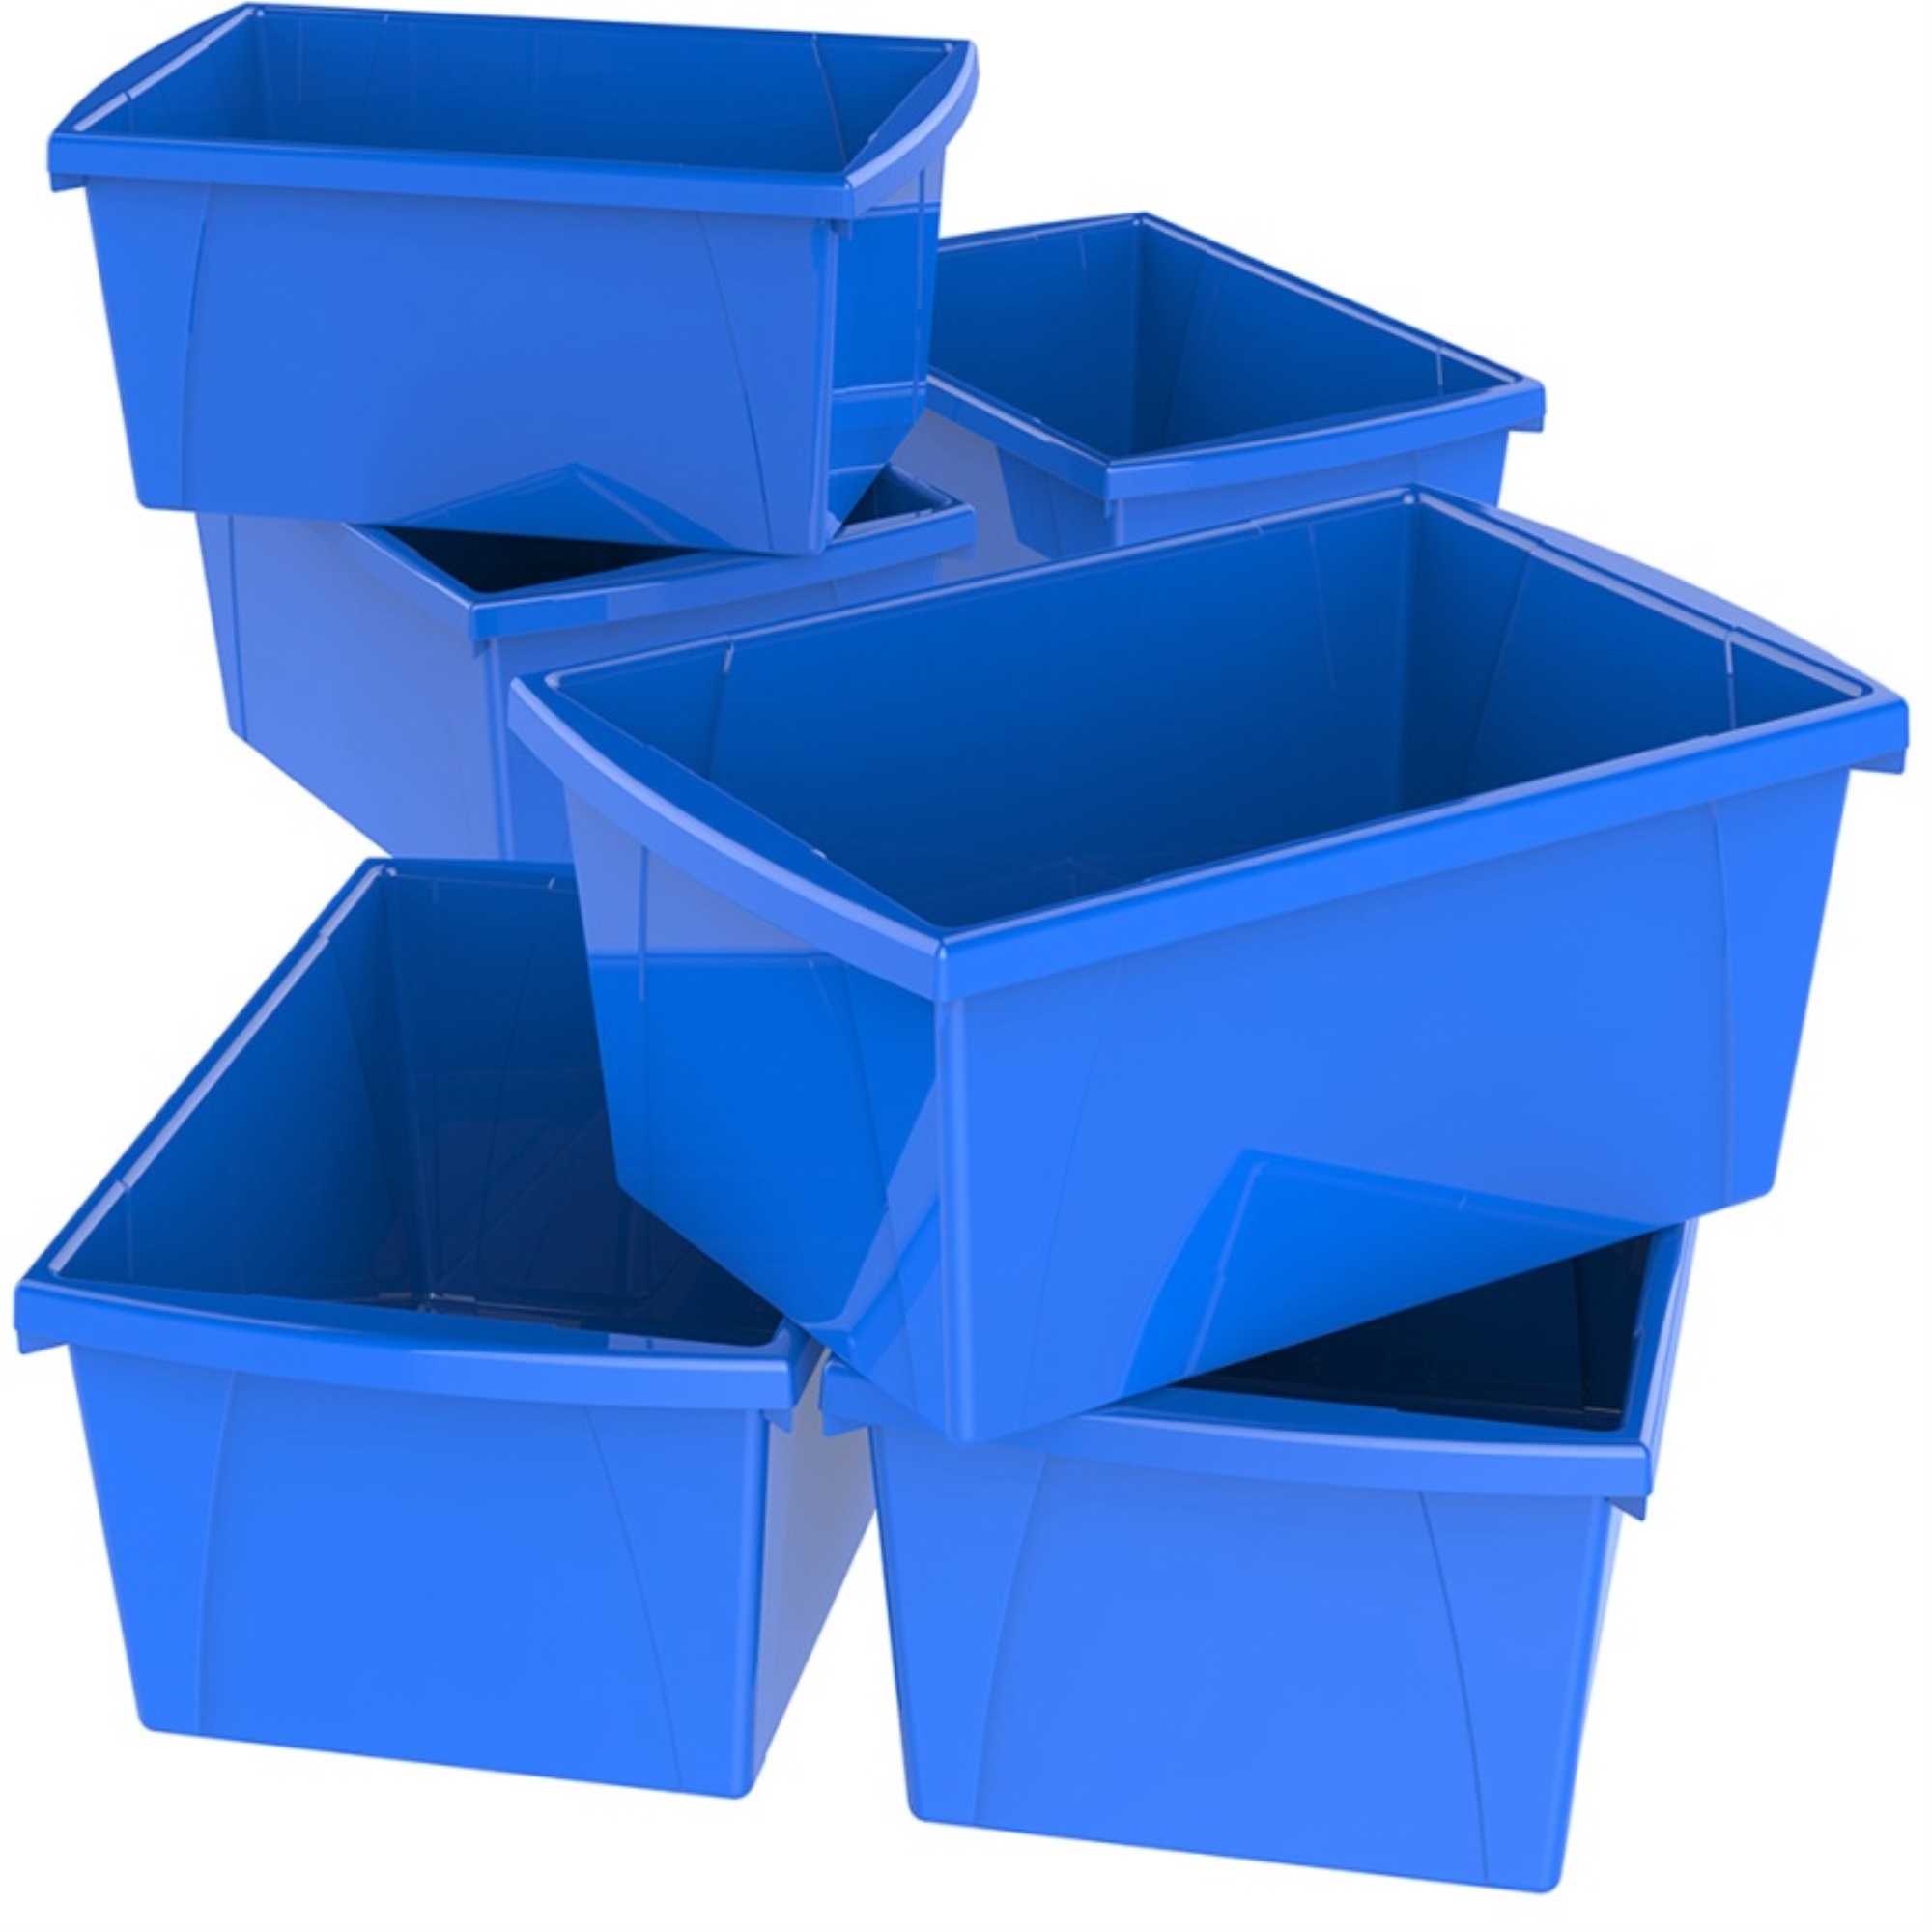 Storex 5.5 Gallon (21L) Classroom Storage Bin, Blue (Case of 6)